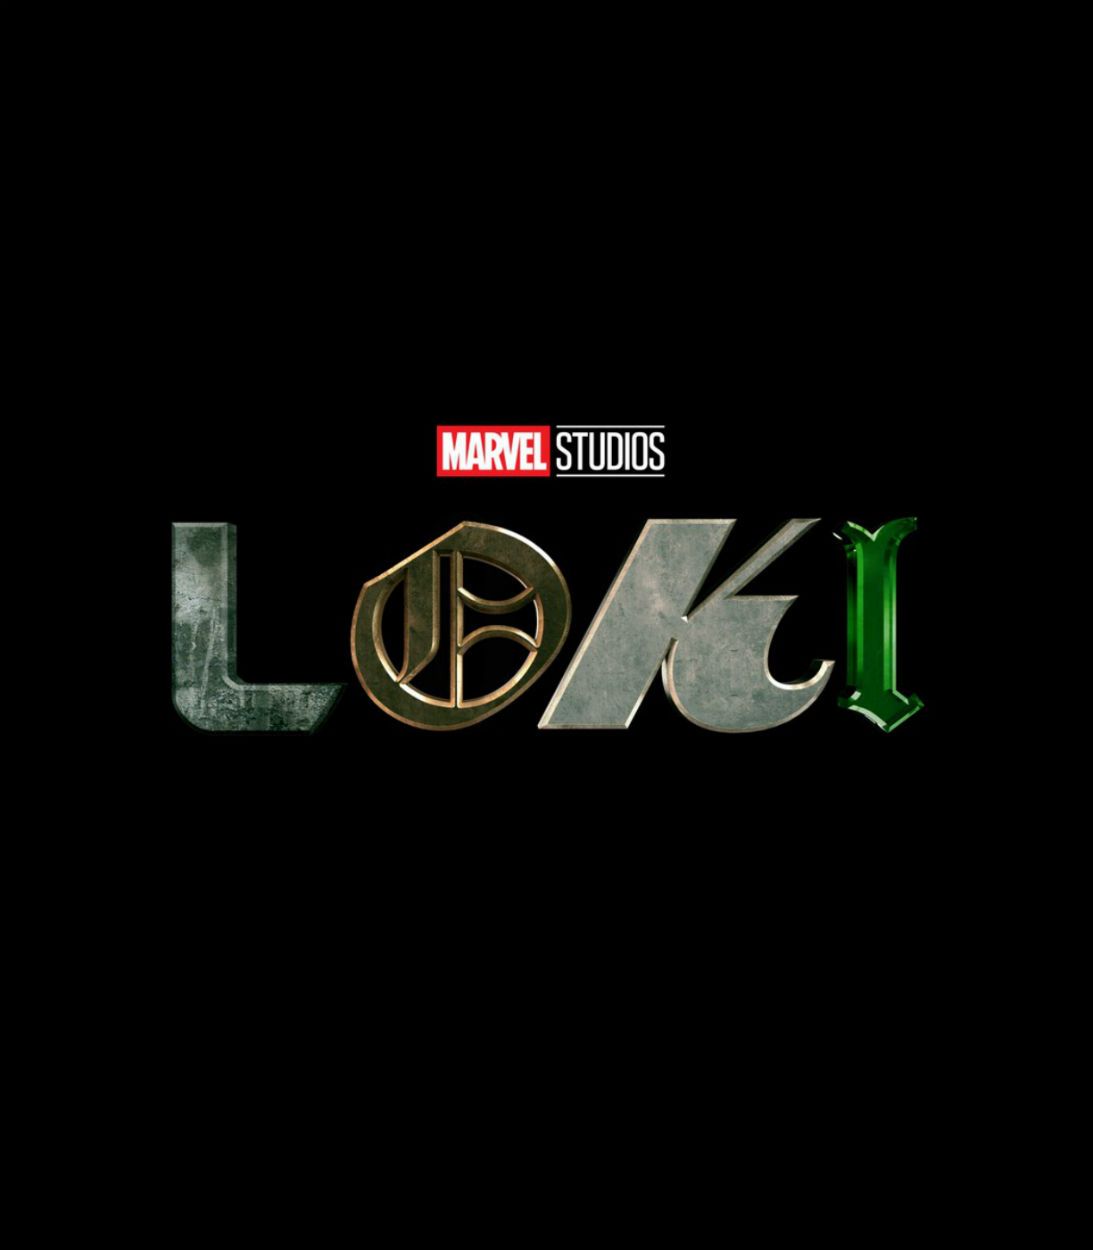 Loki TV Show Logo Vertical